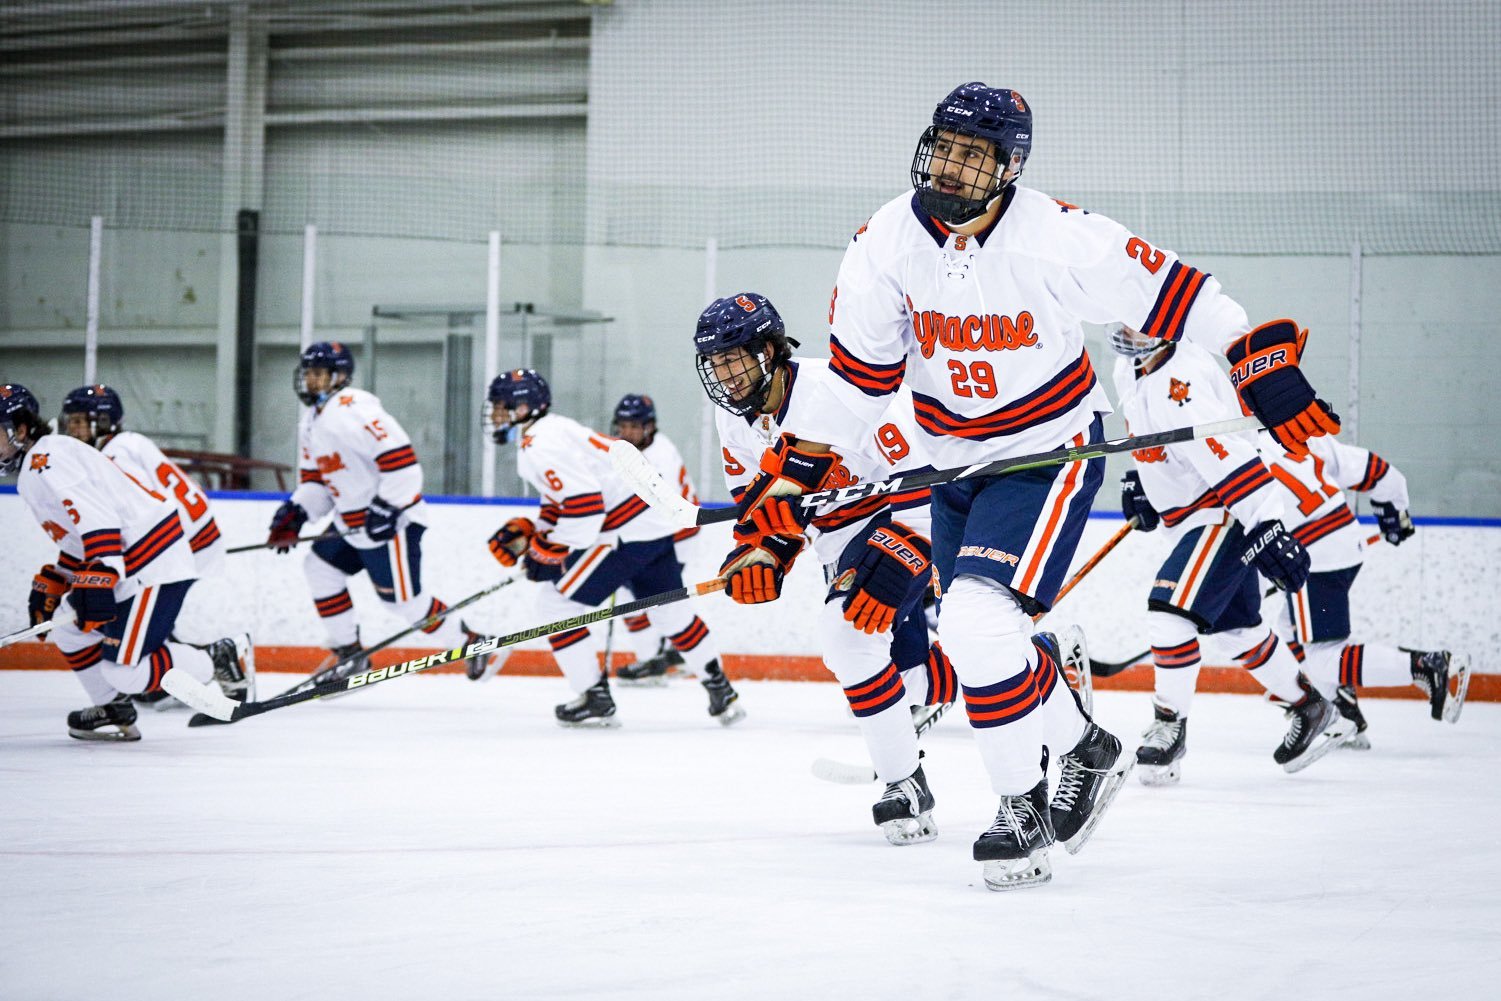 Rebirth Sports helps college club hockey teams with jerseys